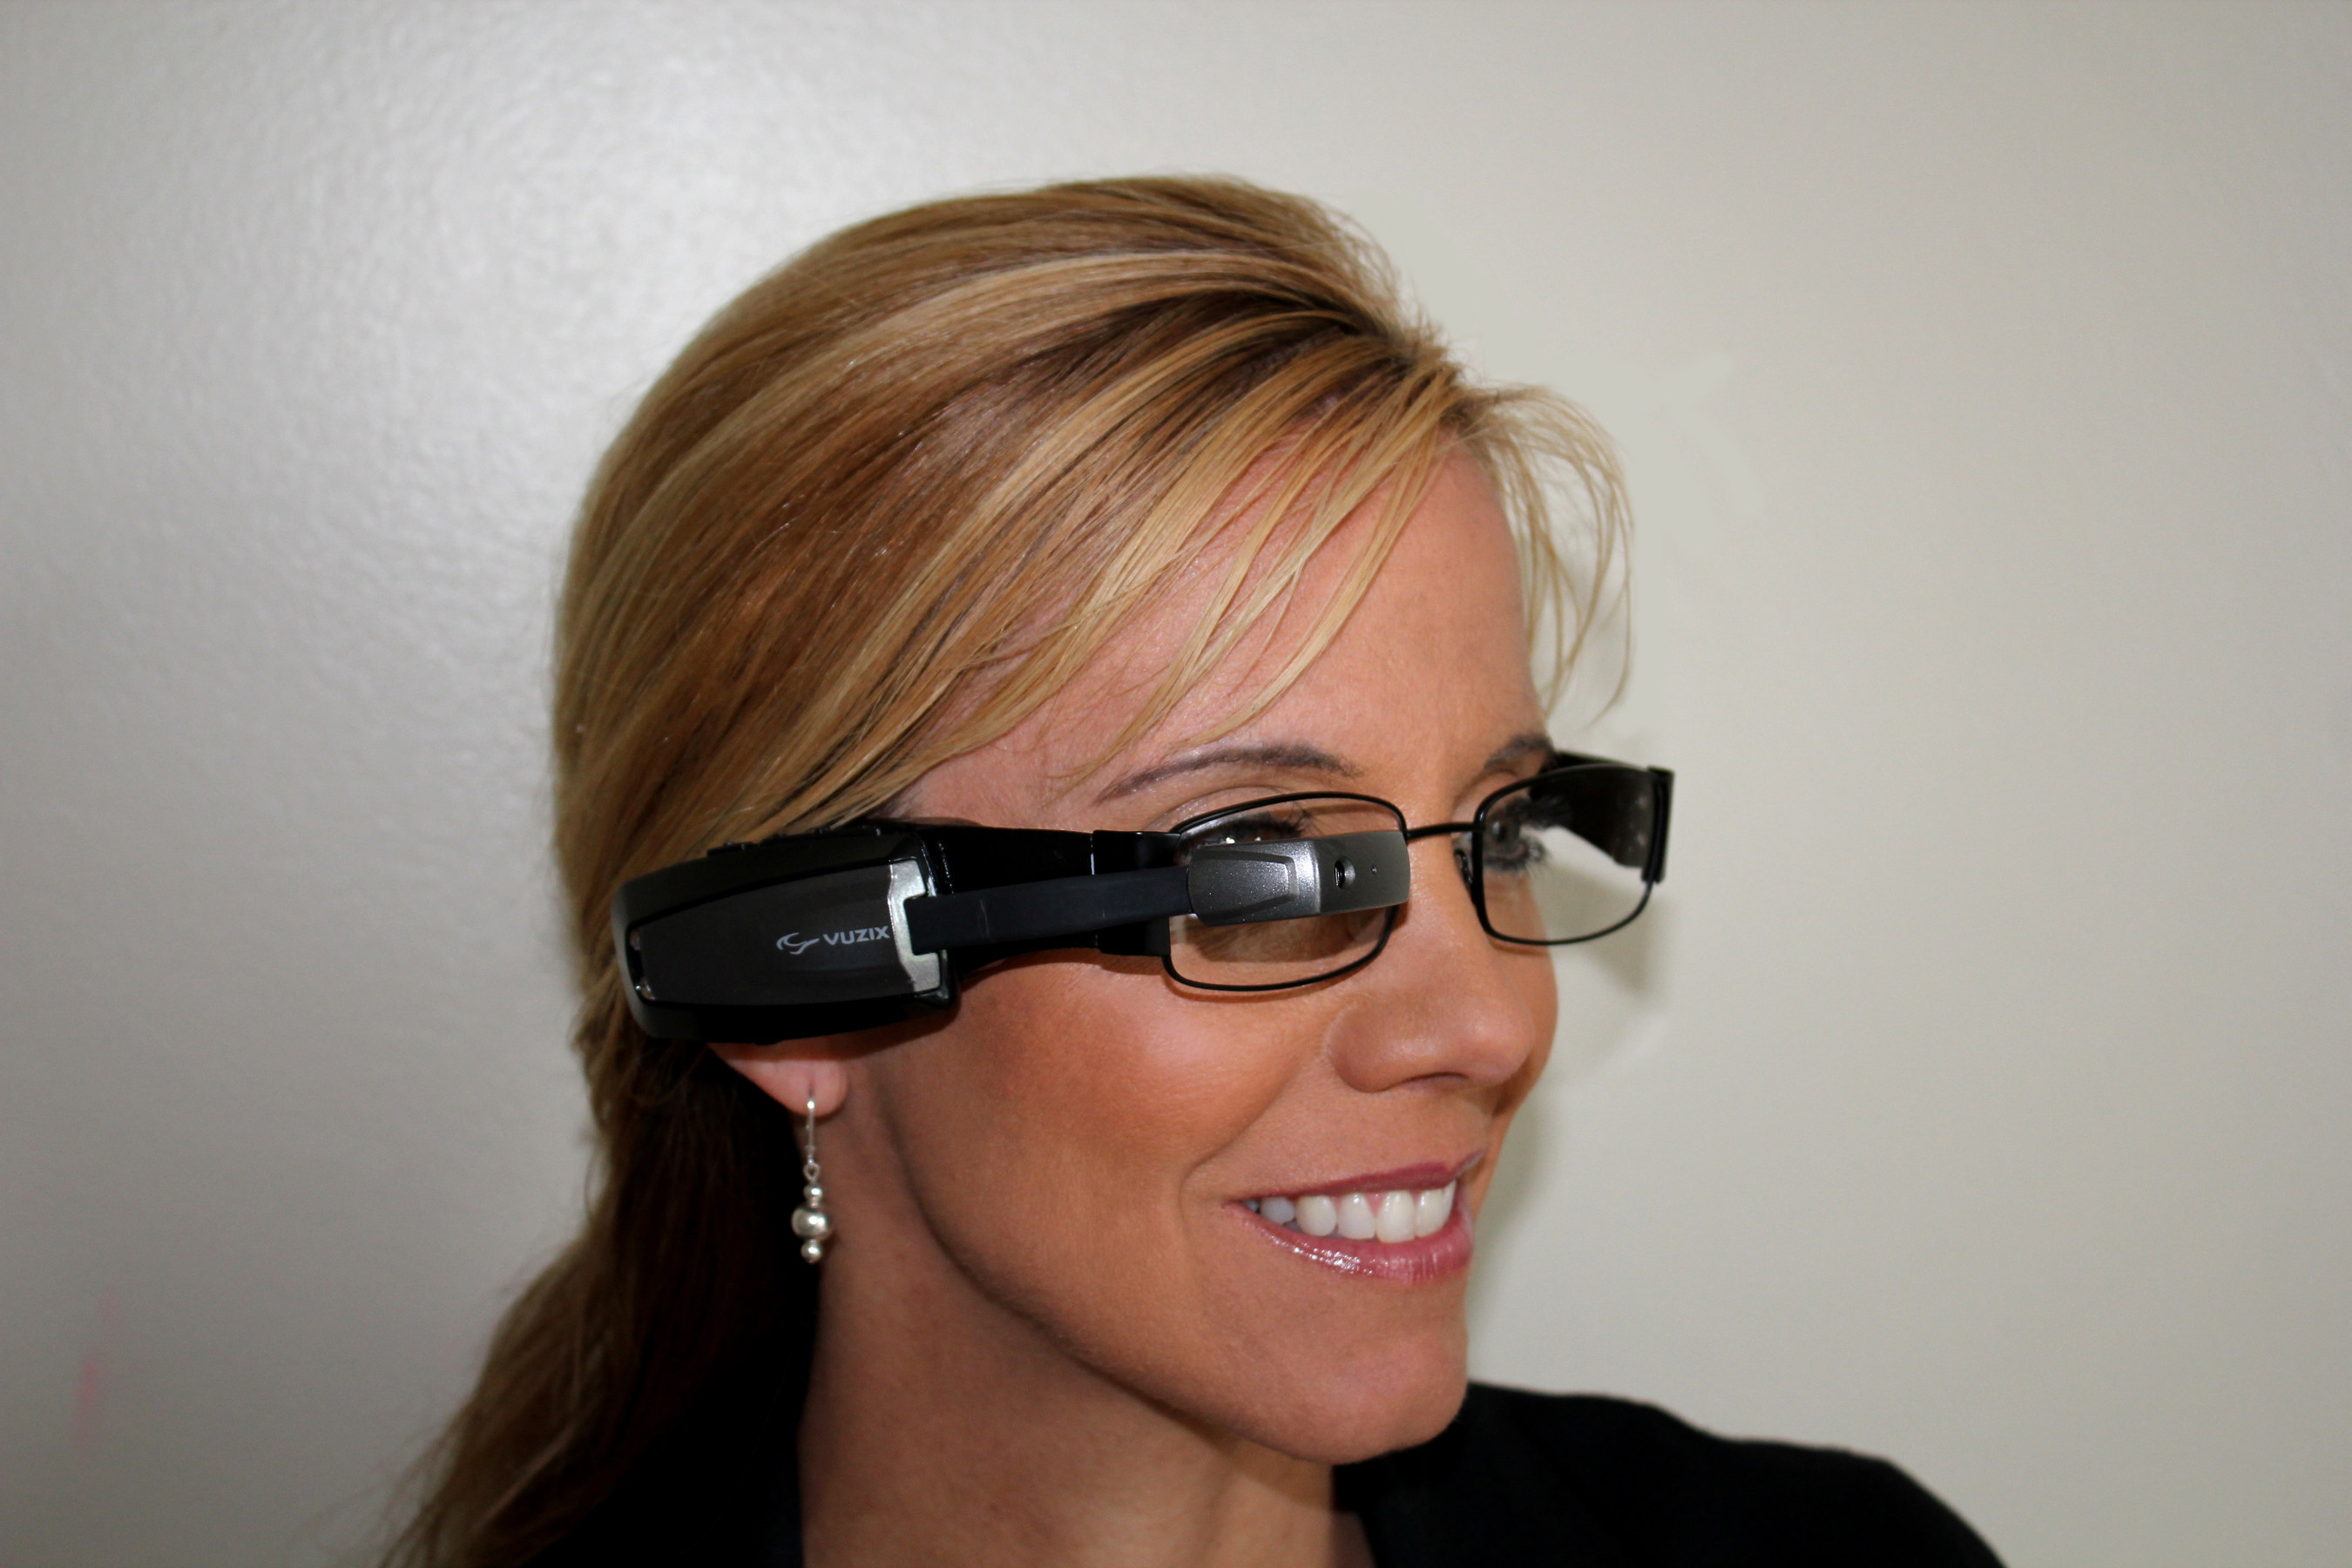 Vuzix M100 Smart Glasses attached to prescription frames (PRNewsFoto/Vuzix Corporation)